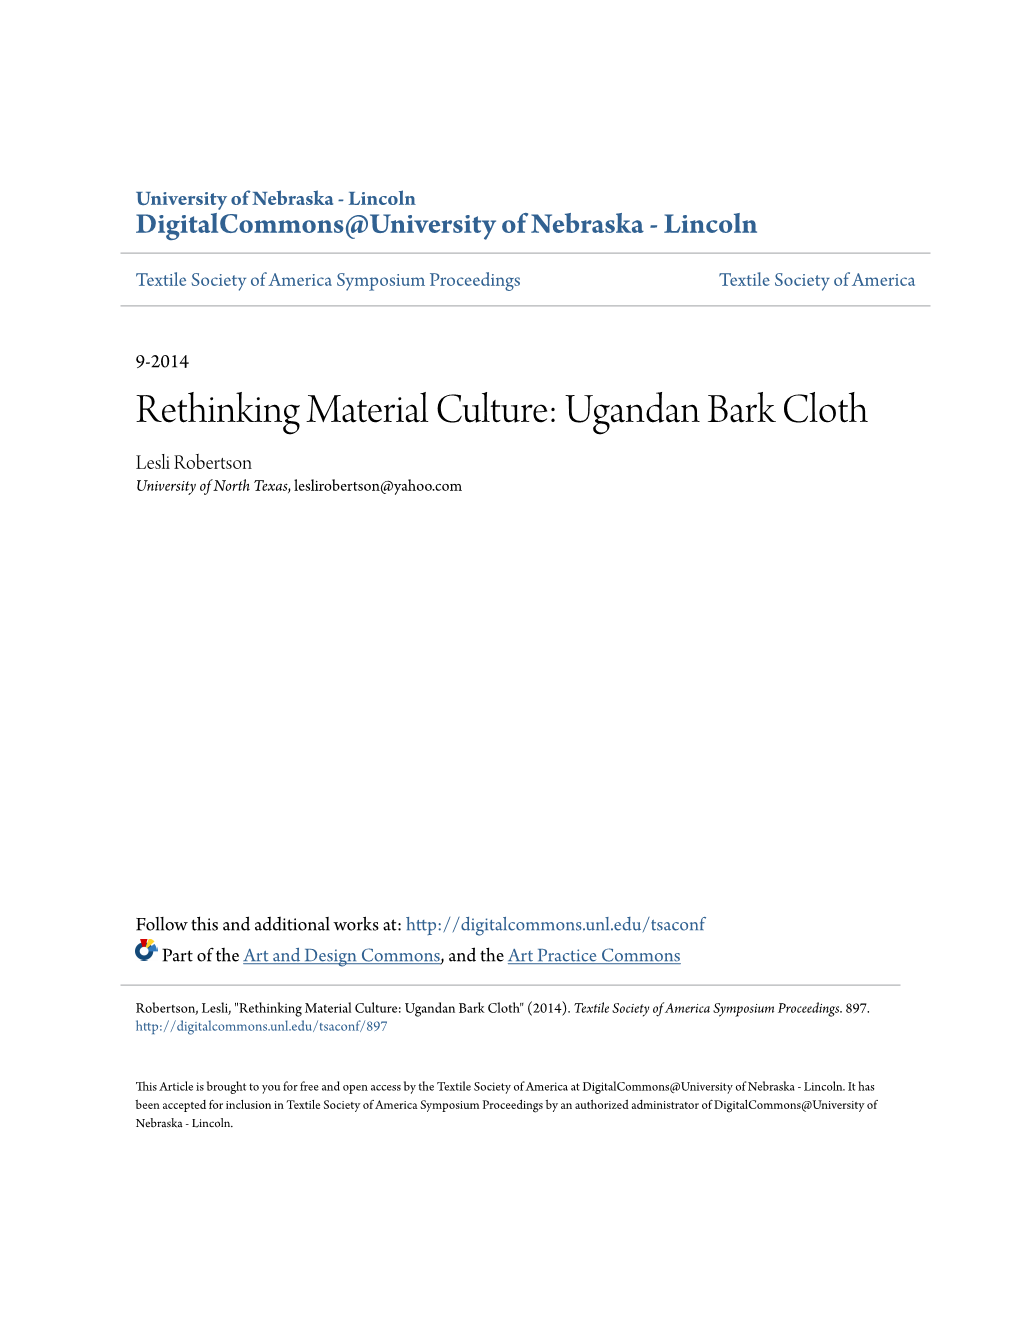 Rethinking Material Culture: Ugandan Bark Cloth Lesli Robertson University of North Texas, Leslirobertson@Yahoo.Com